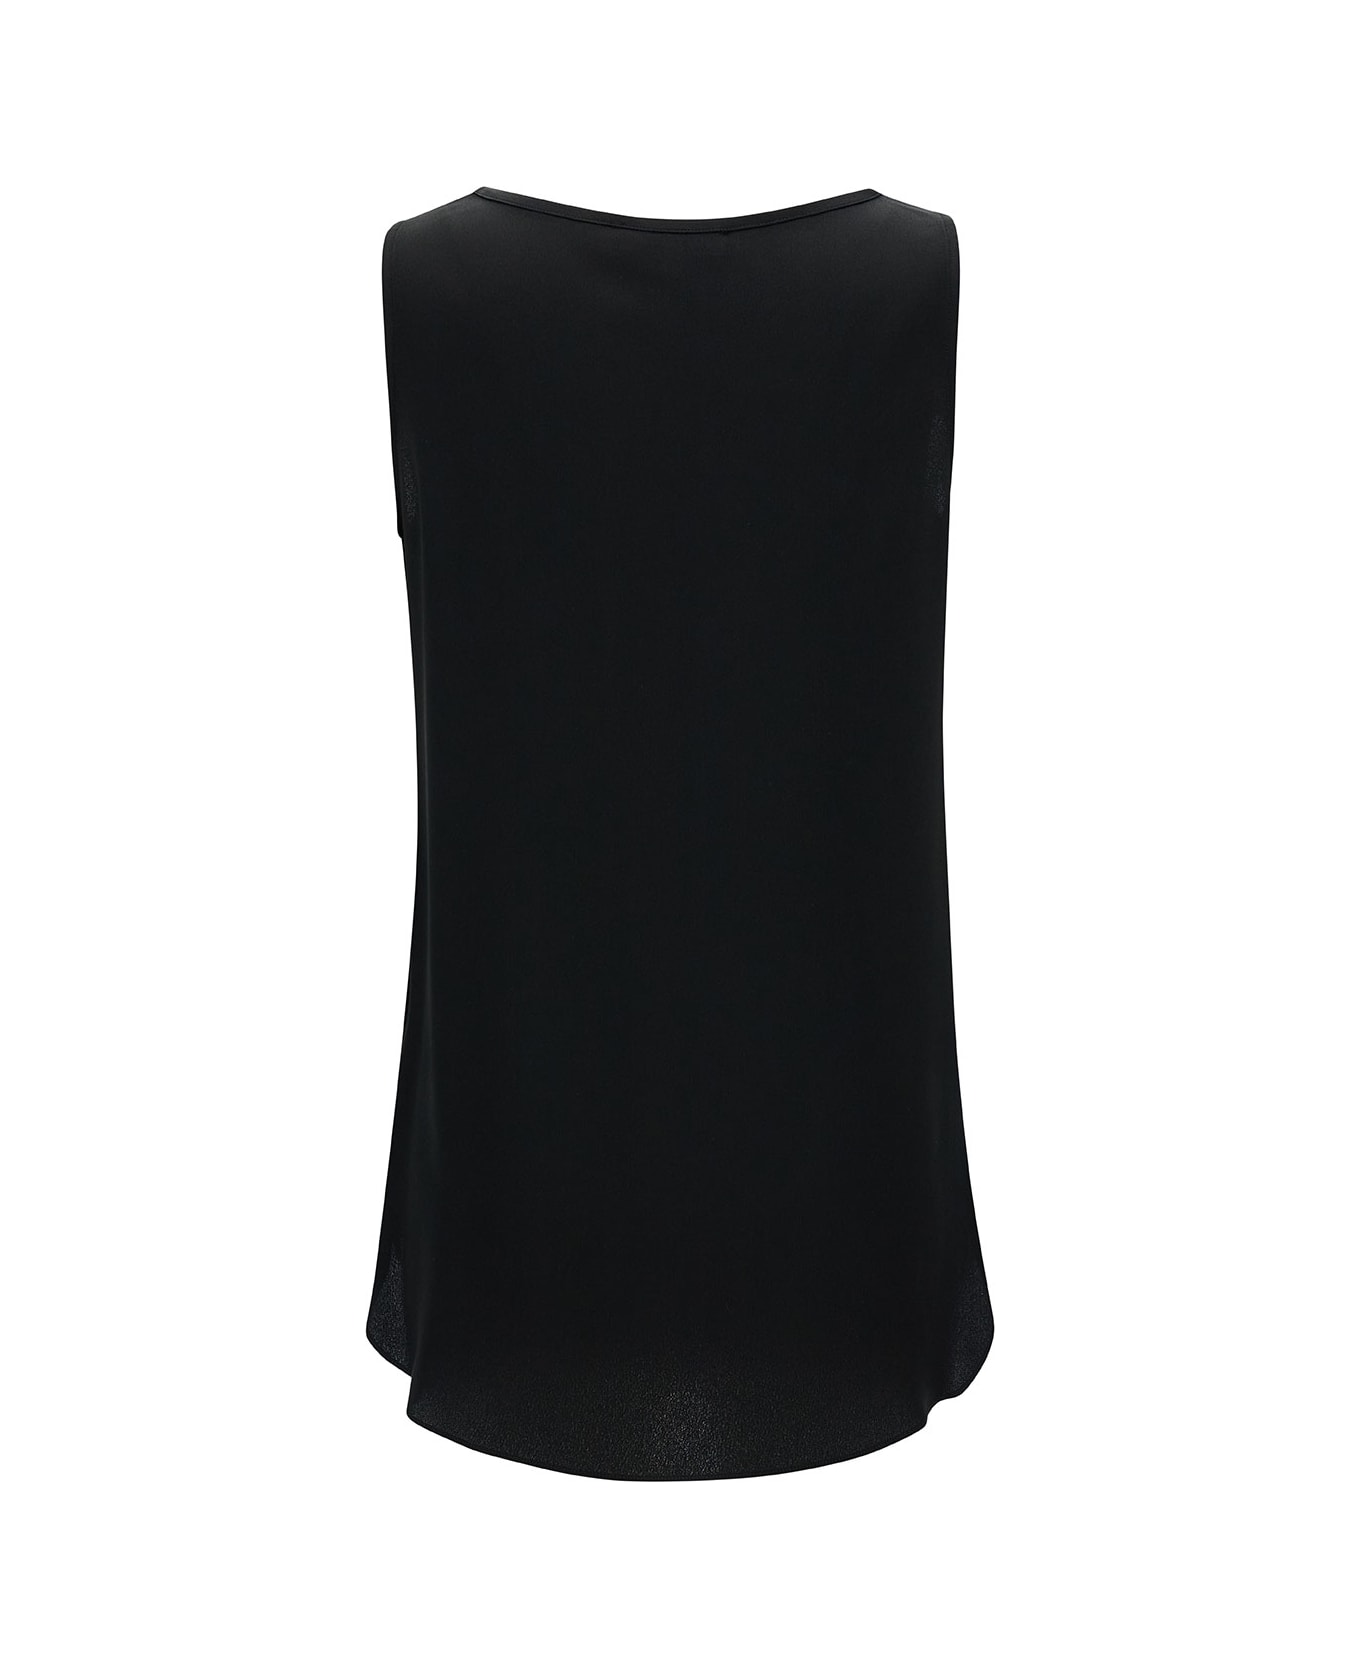 Antonelli 'perugia' Black Sleeveless Top With U Neckline In Silk Blend Woman - Black